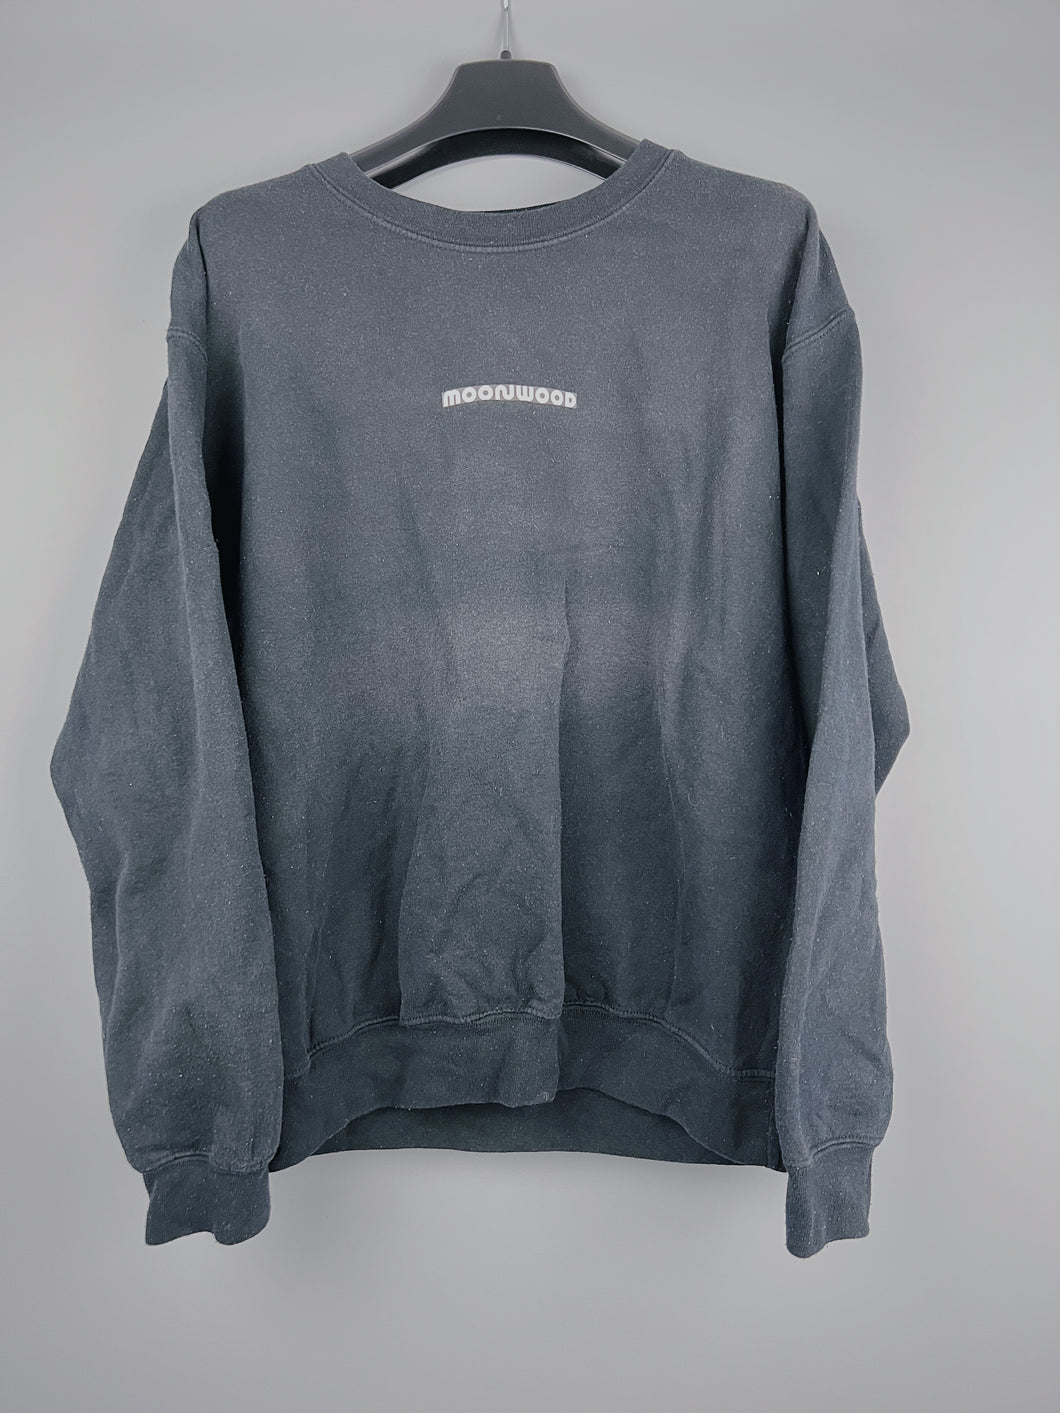 Vintage MOONWOOD Sweatshirt - SIZE M